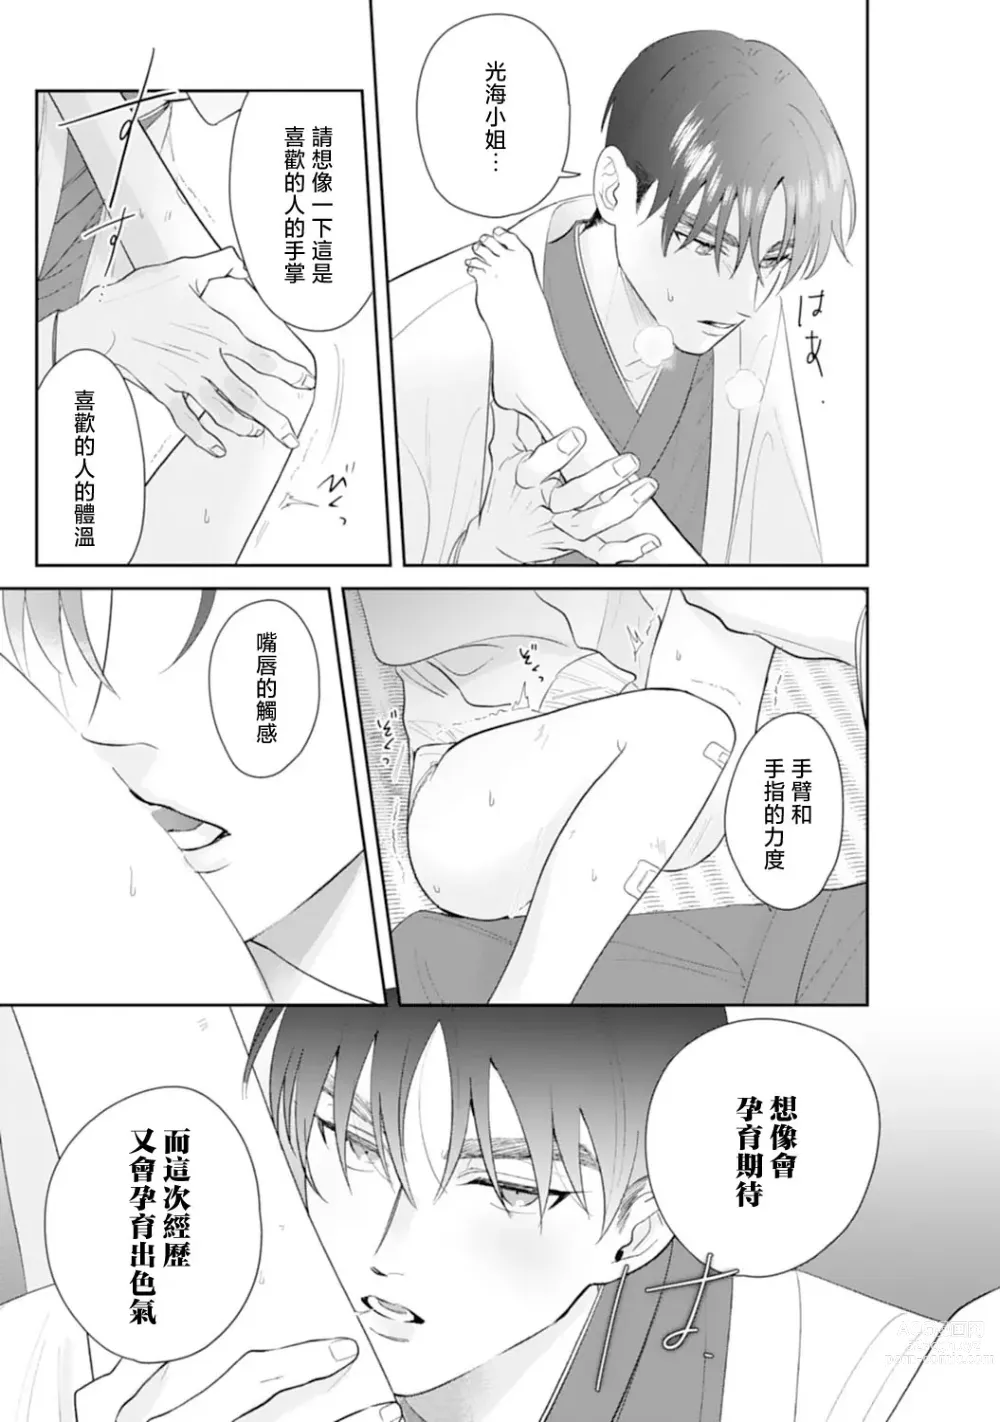 Page 59 of manga 浅叶老师专一的纯爱 1-2